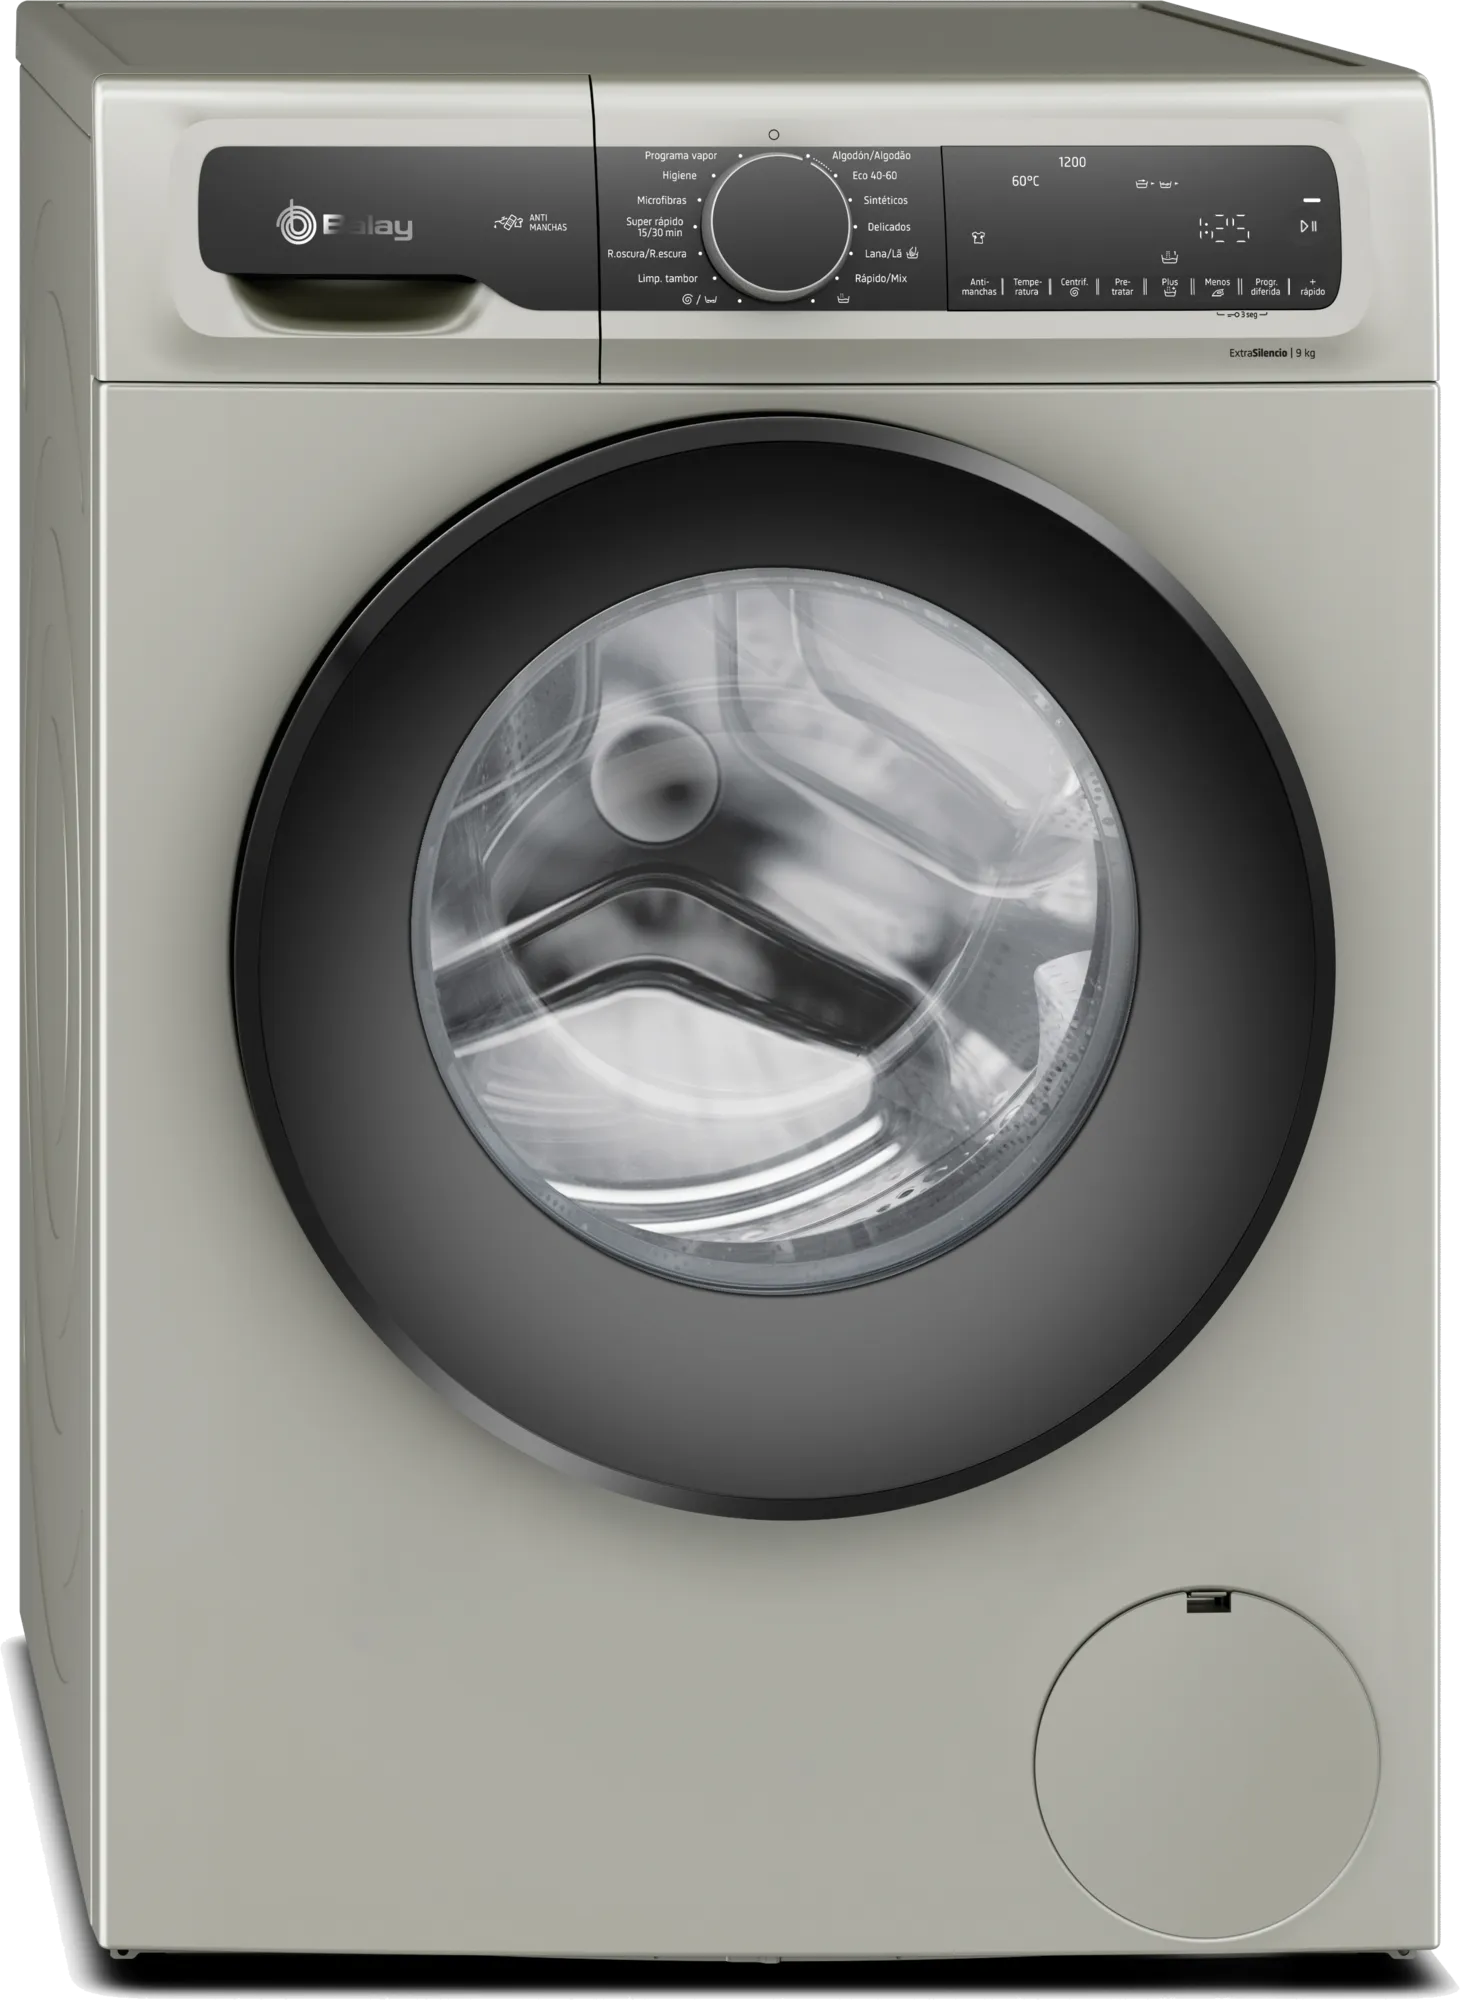 Comprar lavadora inox 3TS490X 9 kg balay